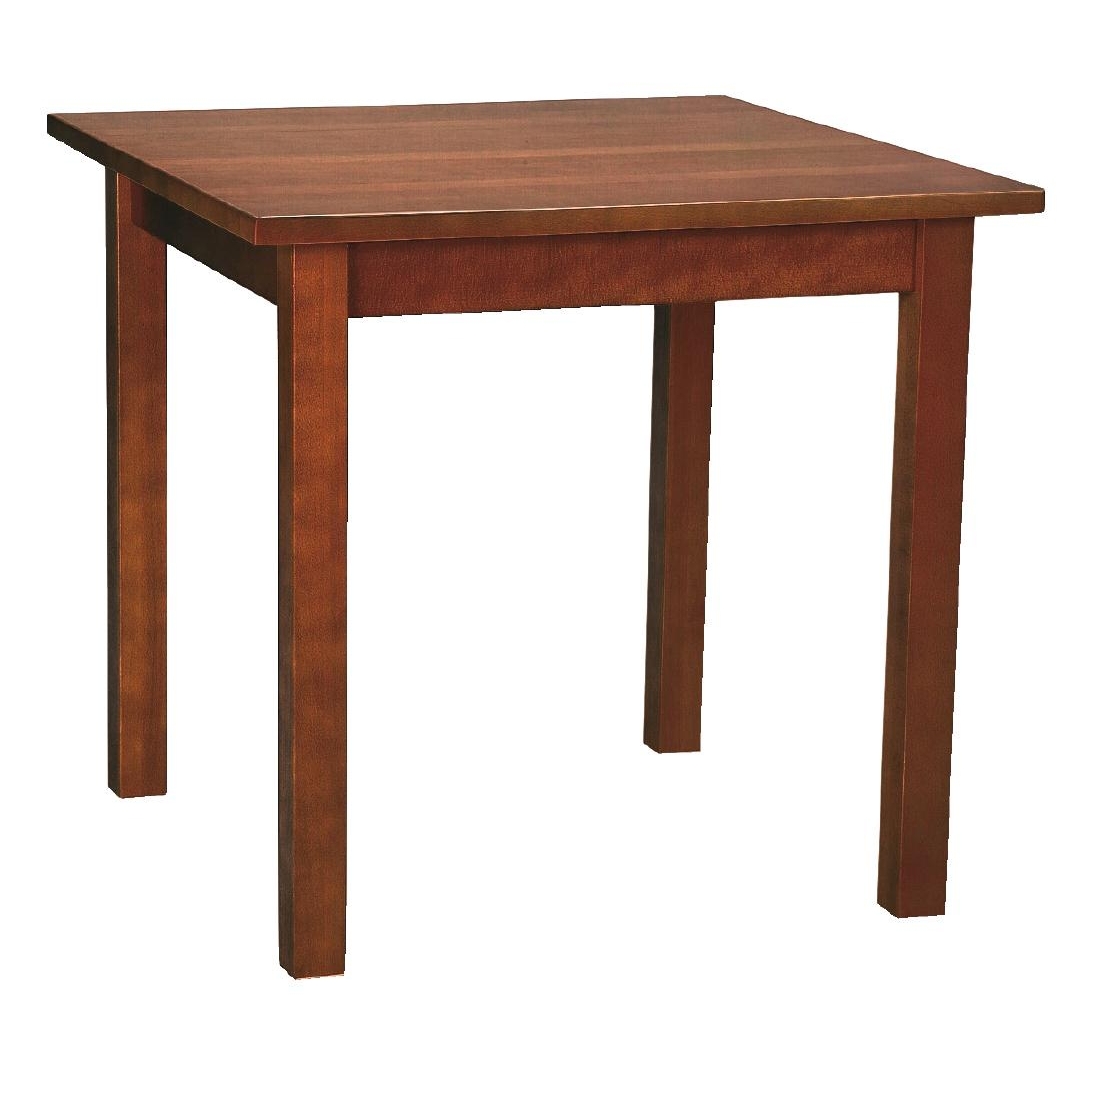 Wooden Dining Table Walnut Finish 760mm